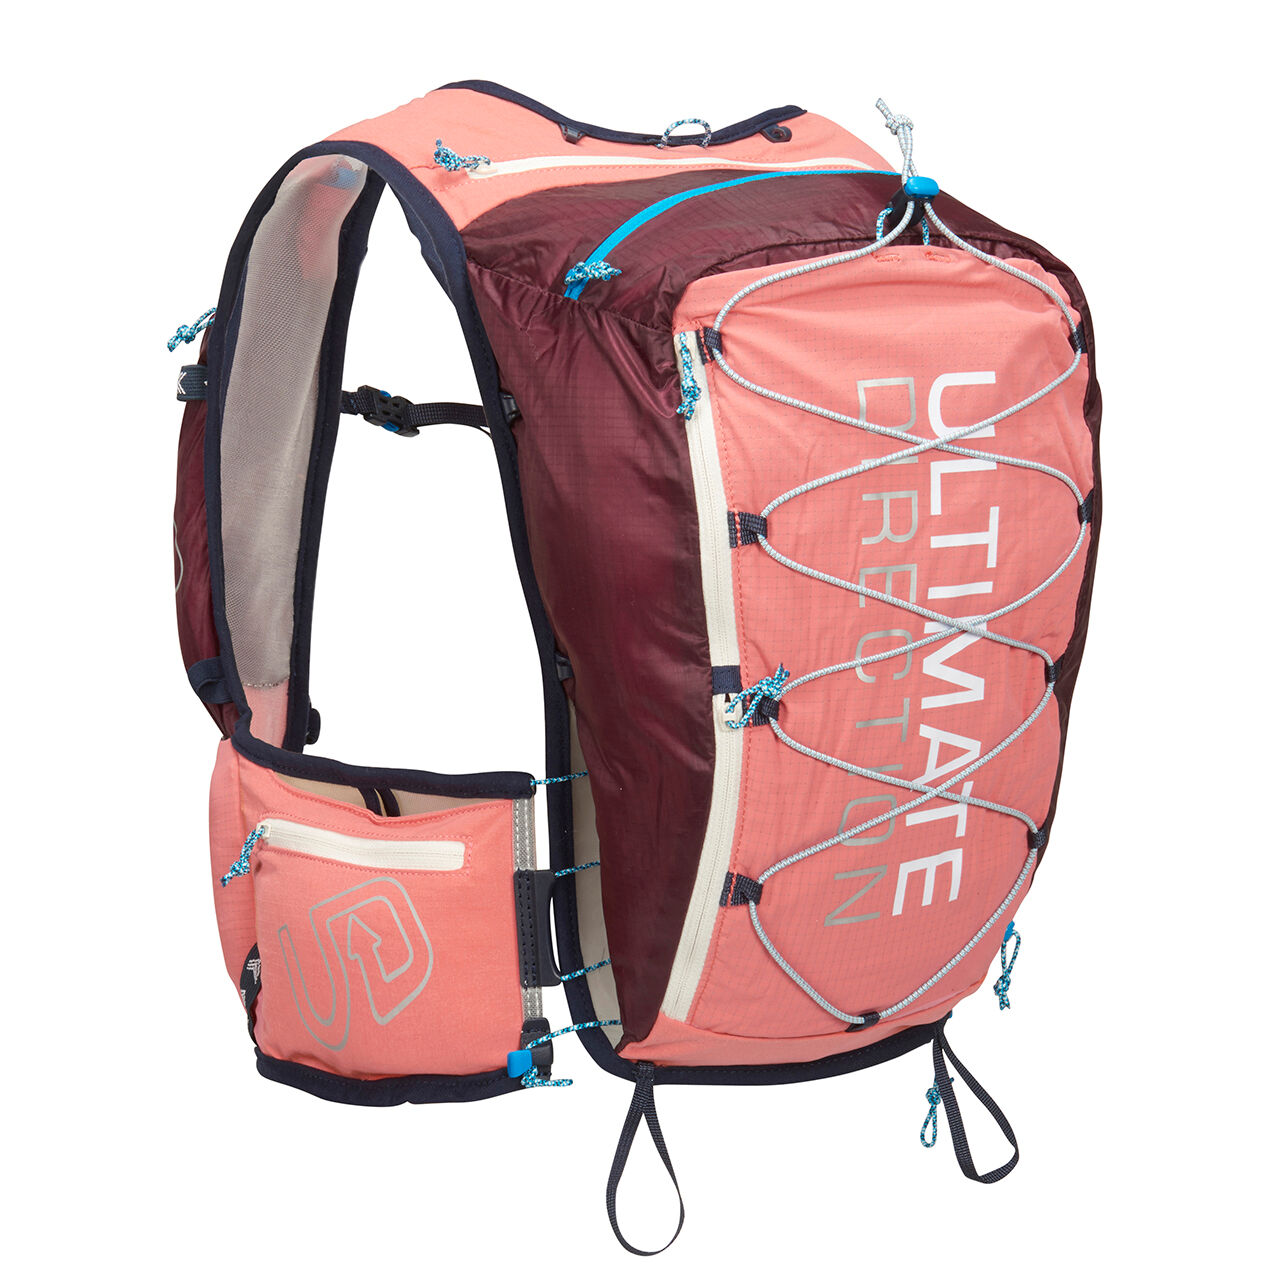 Ultimate Direction - Adventure Vesta 4.0 - Trail running backpack - Women's